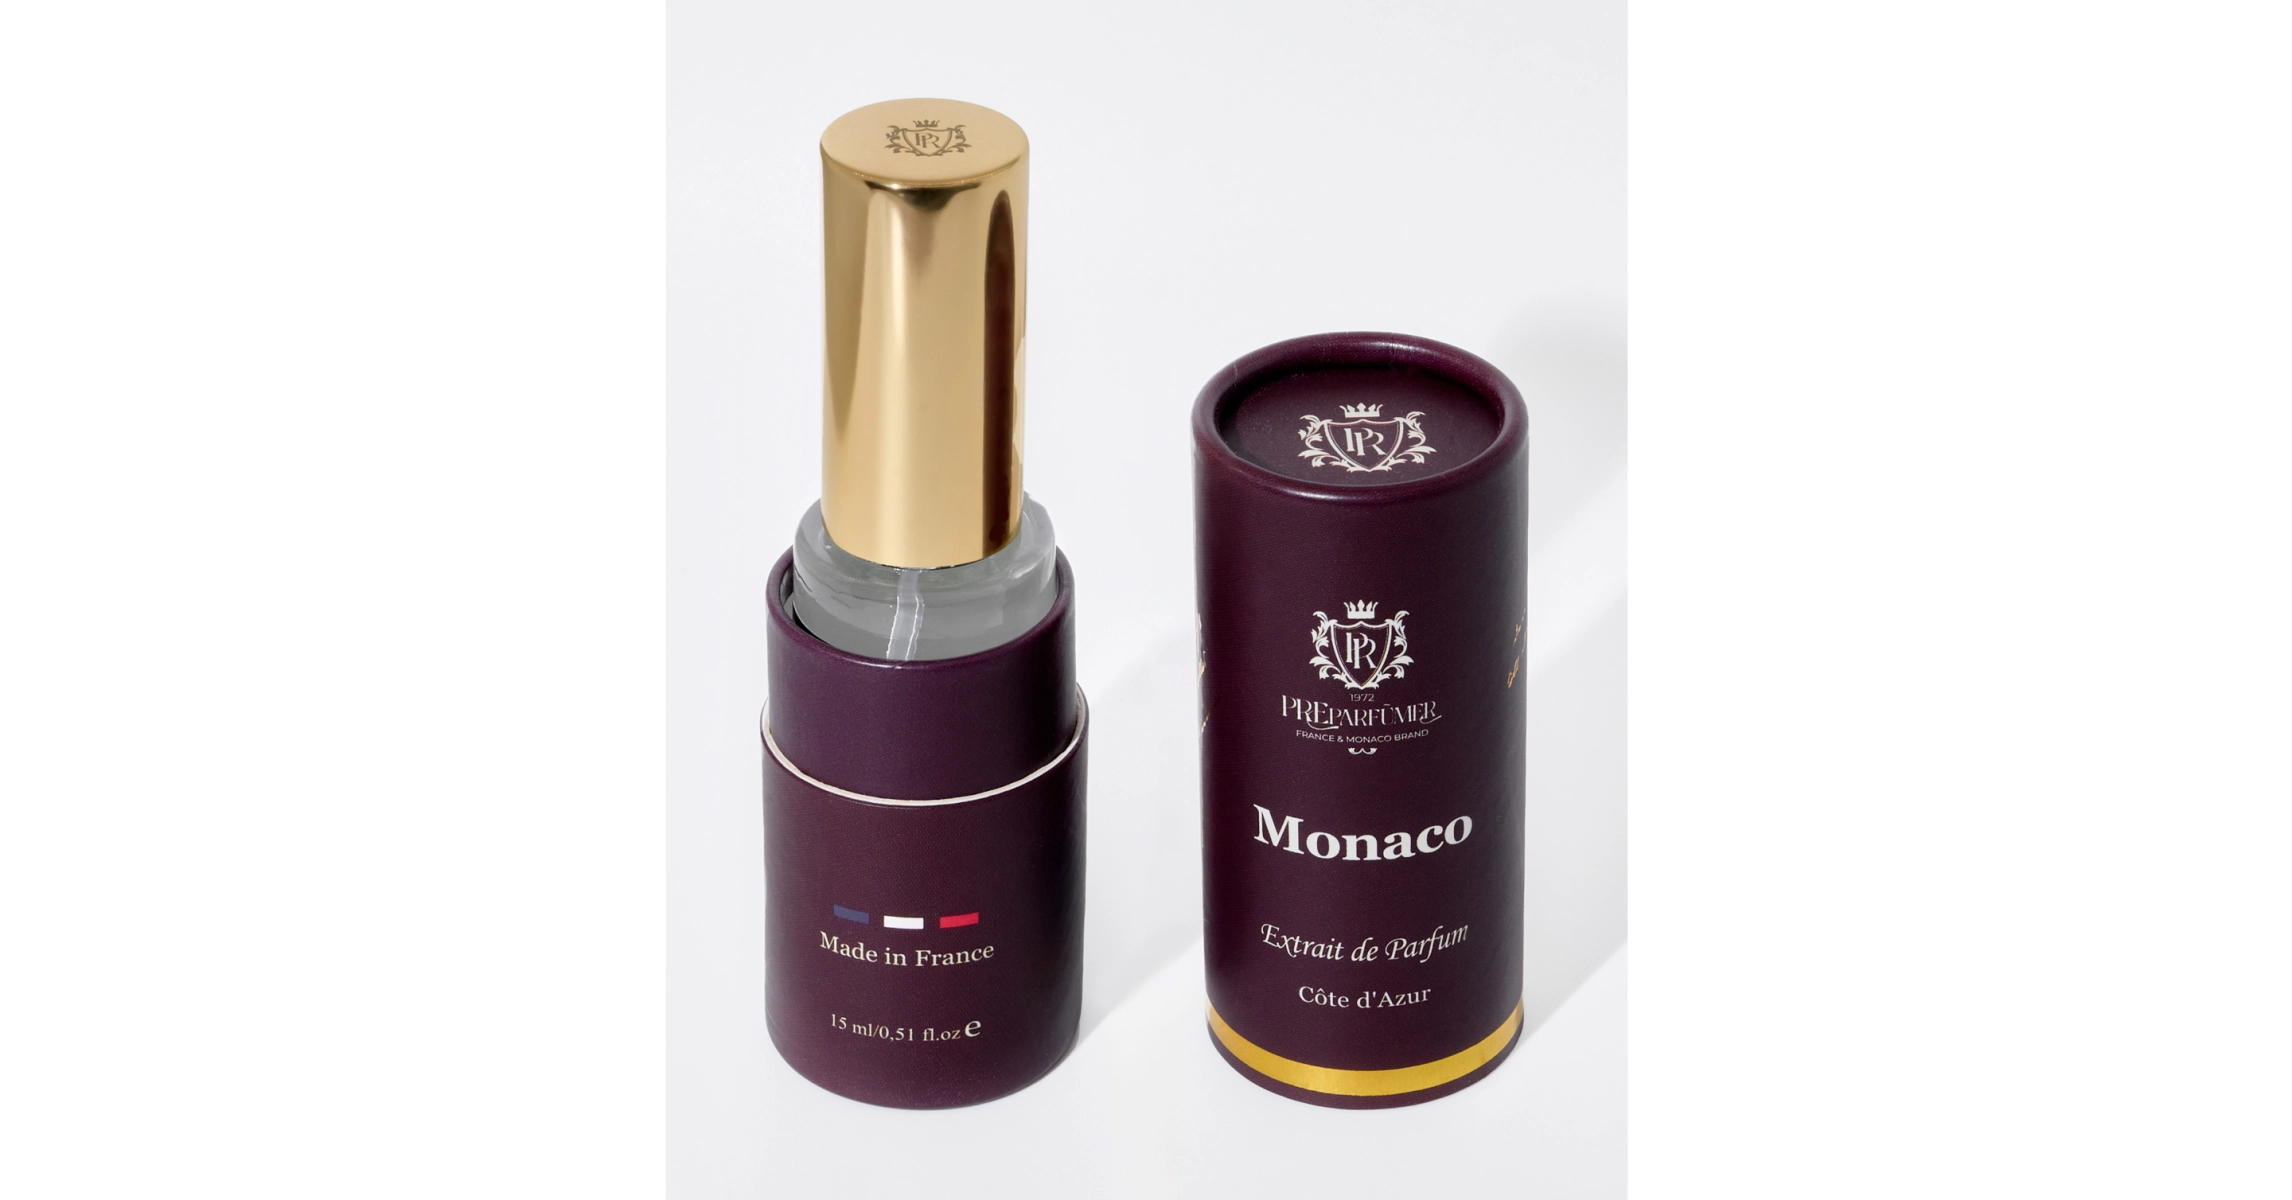 Extrait de Parfum - Monaco, 15 ml